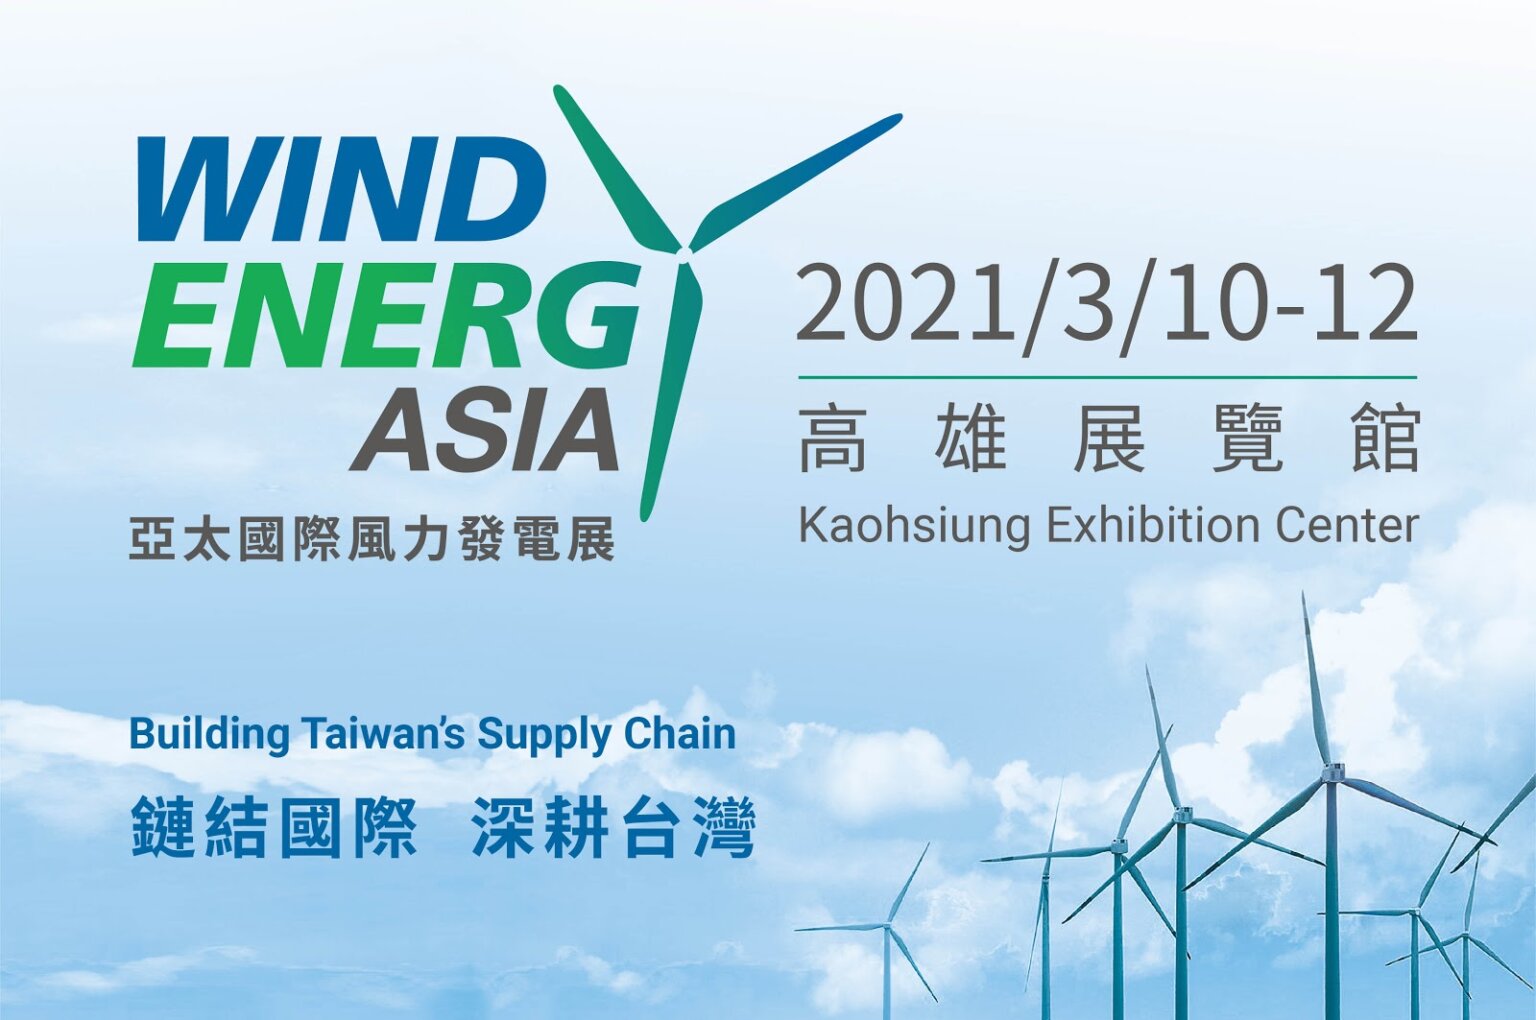 Wind Energy Asia 2021